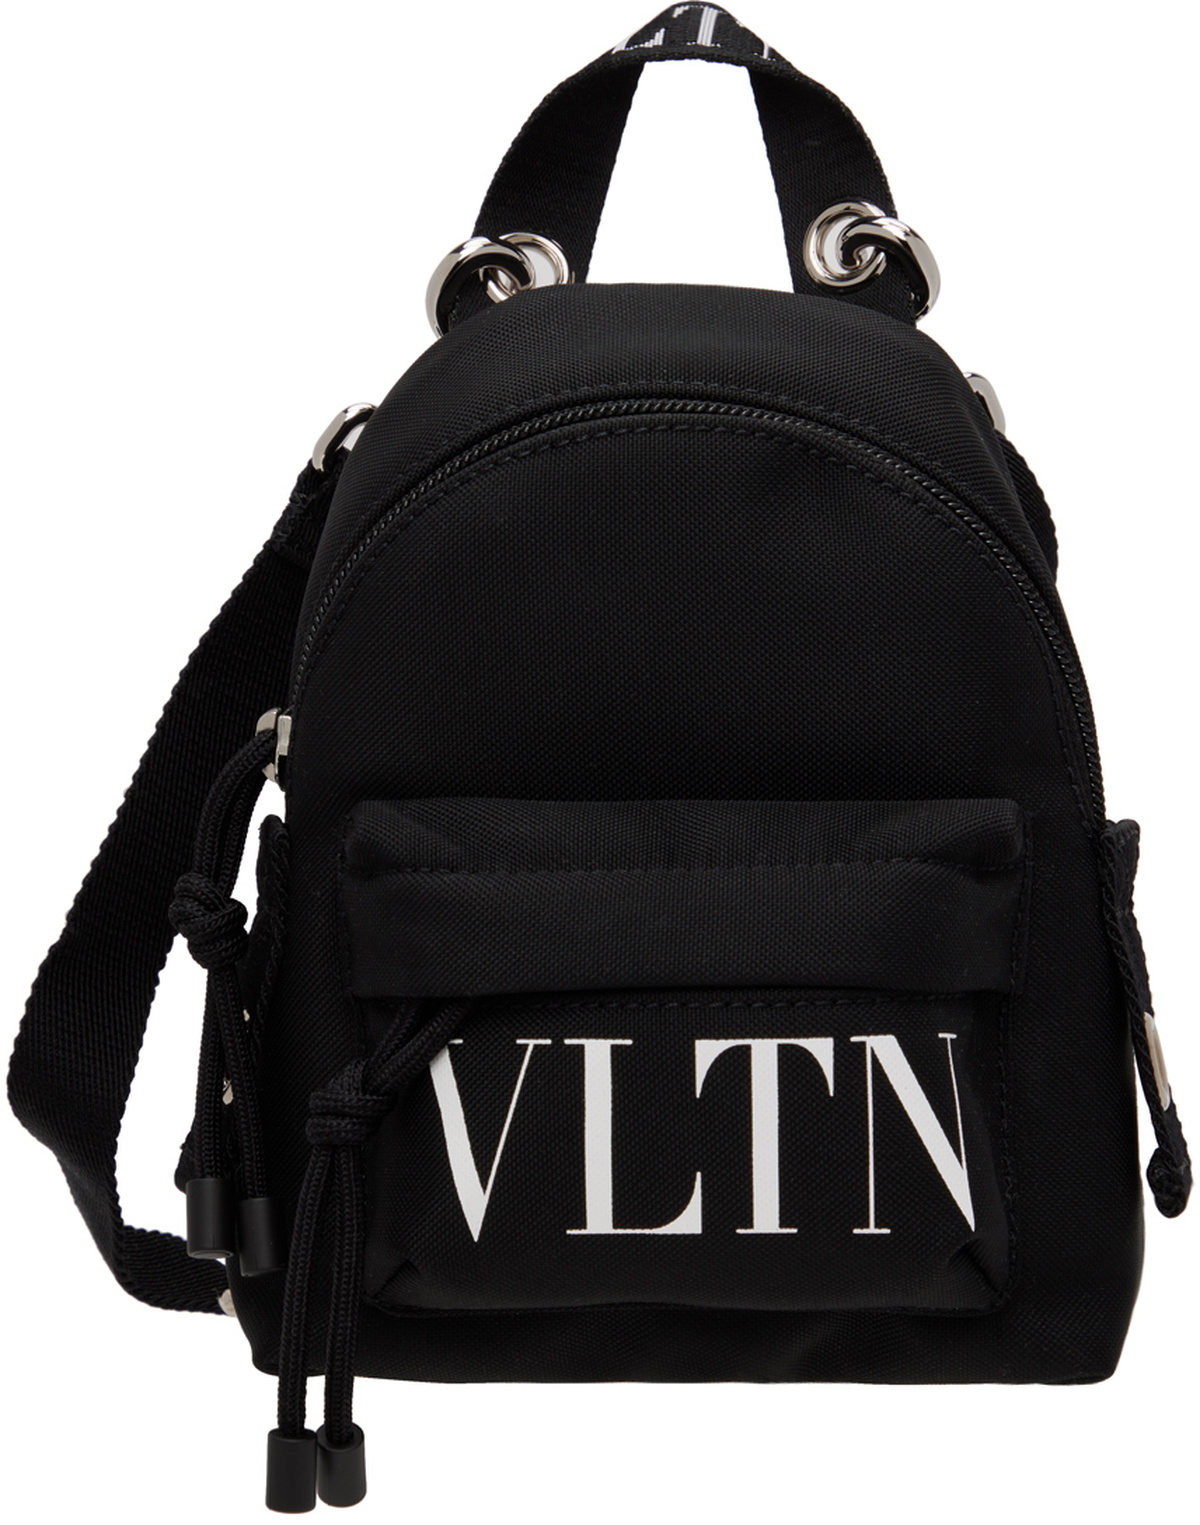 Valentino garavani vltn backpack